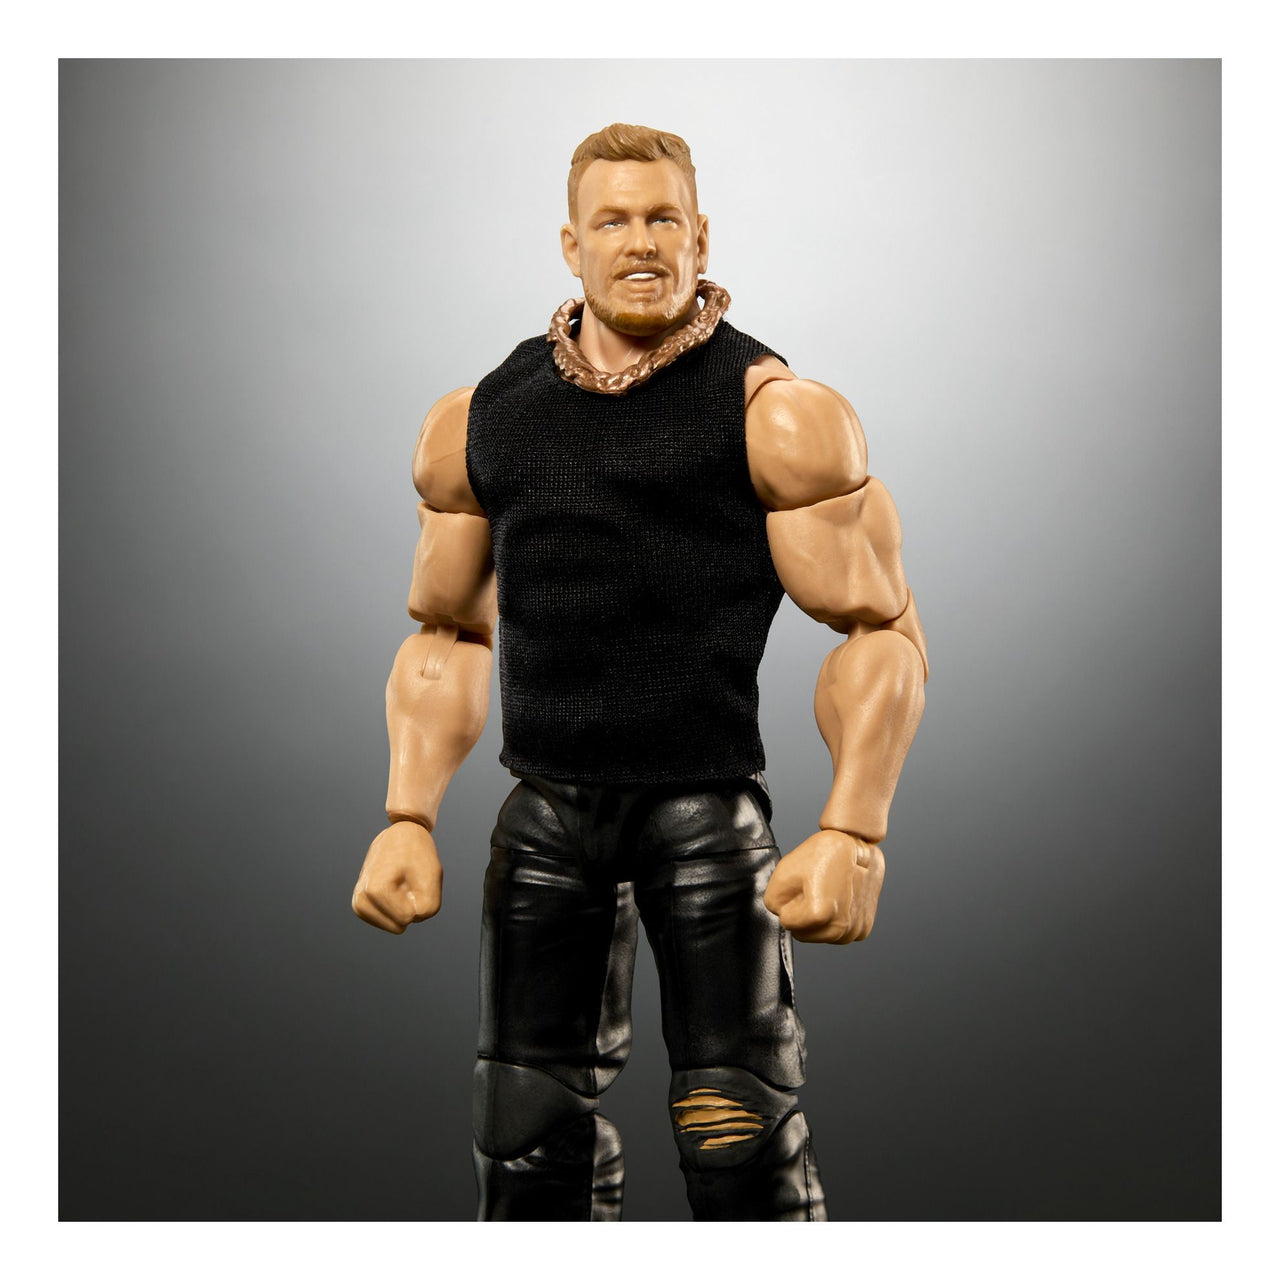 WWE Elite WrestleMania Pat McAfee Action Figure WWE